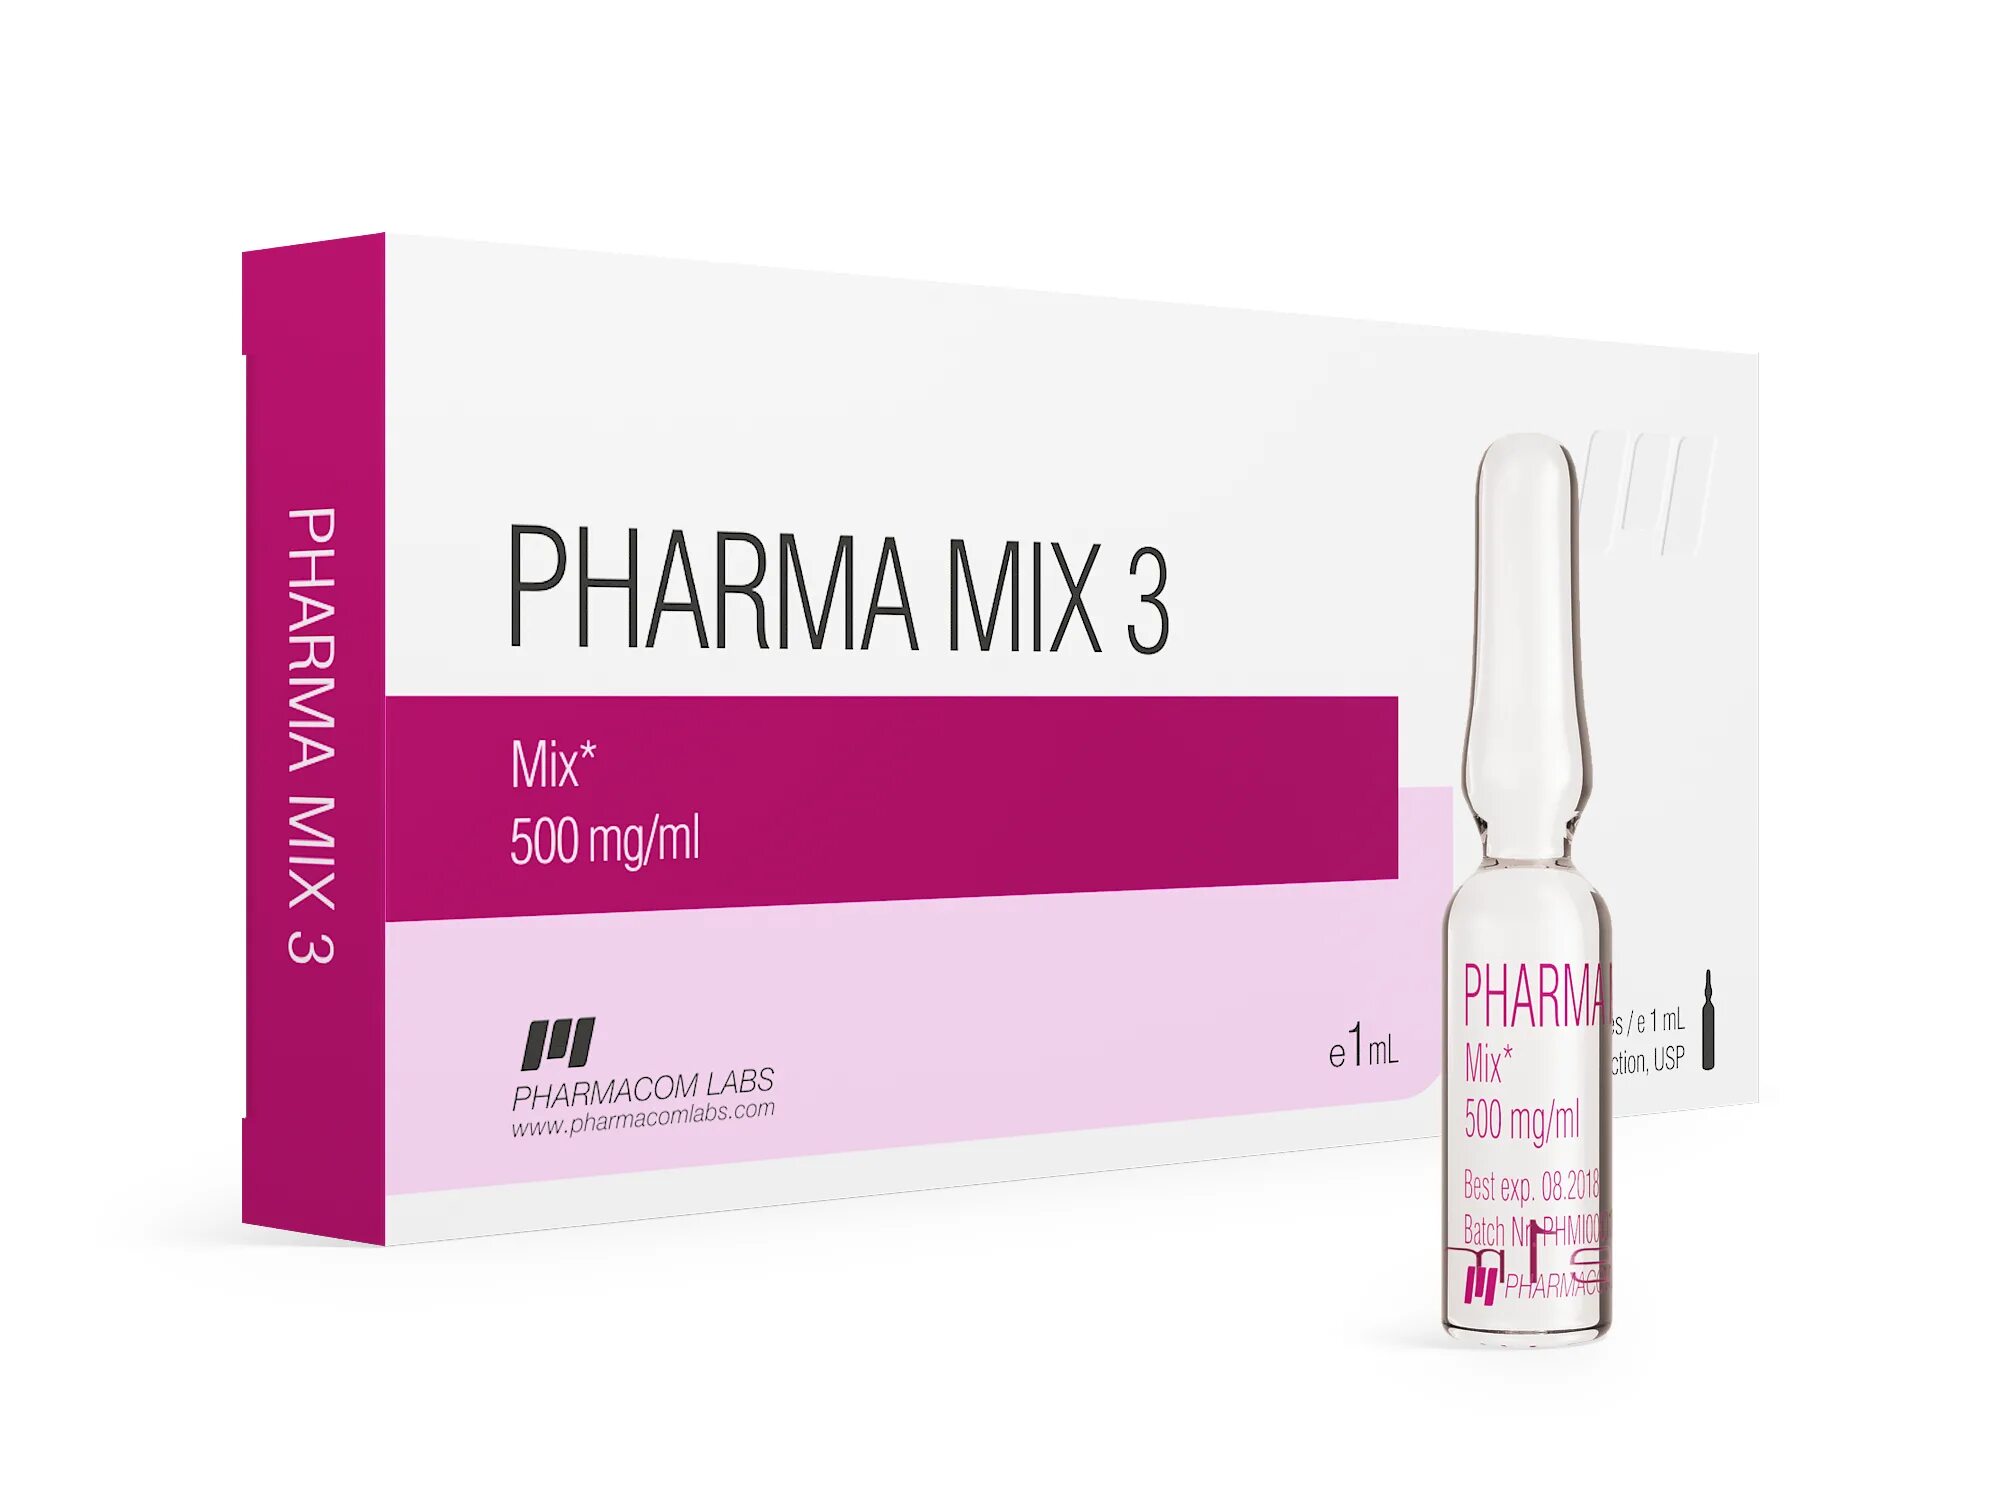 Pharma Mix 4 ампулы. Pharma oxy 50 мг/мл. Микс 3 Фармаком. Фарма Dro p100. Pharma mix 3